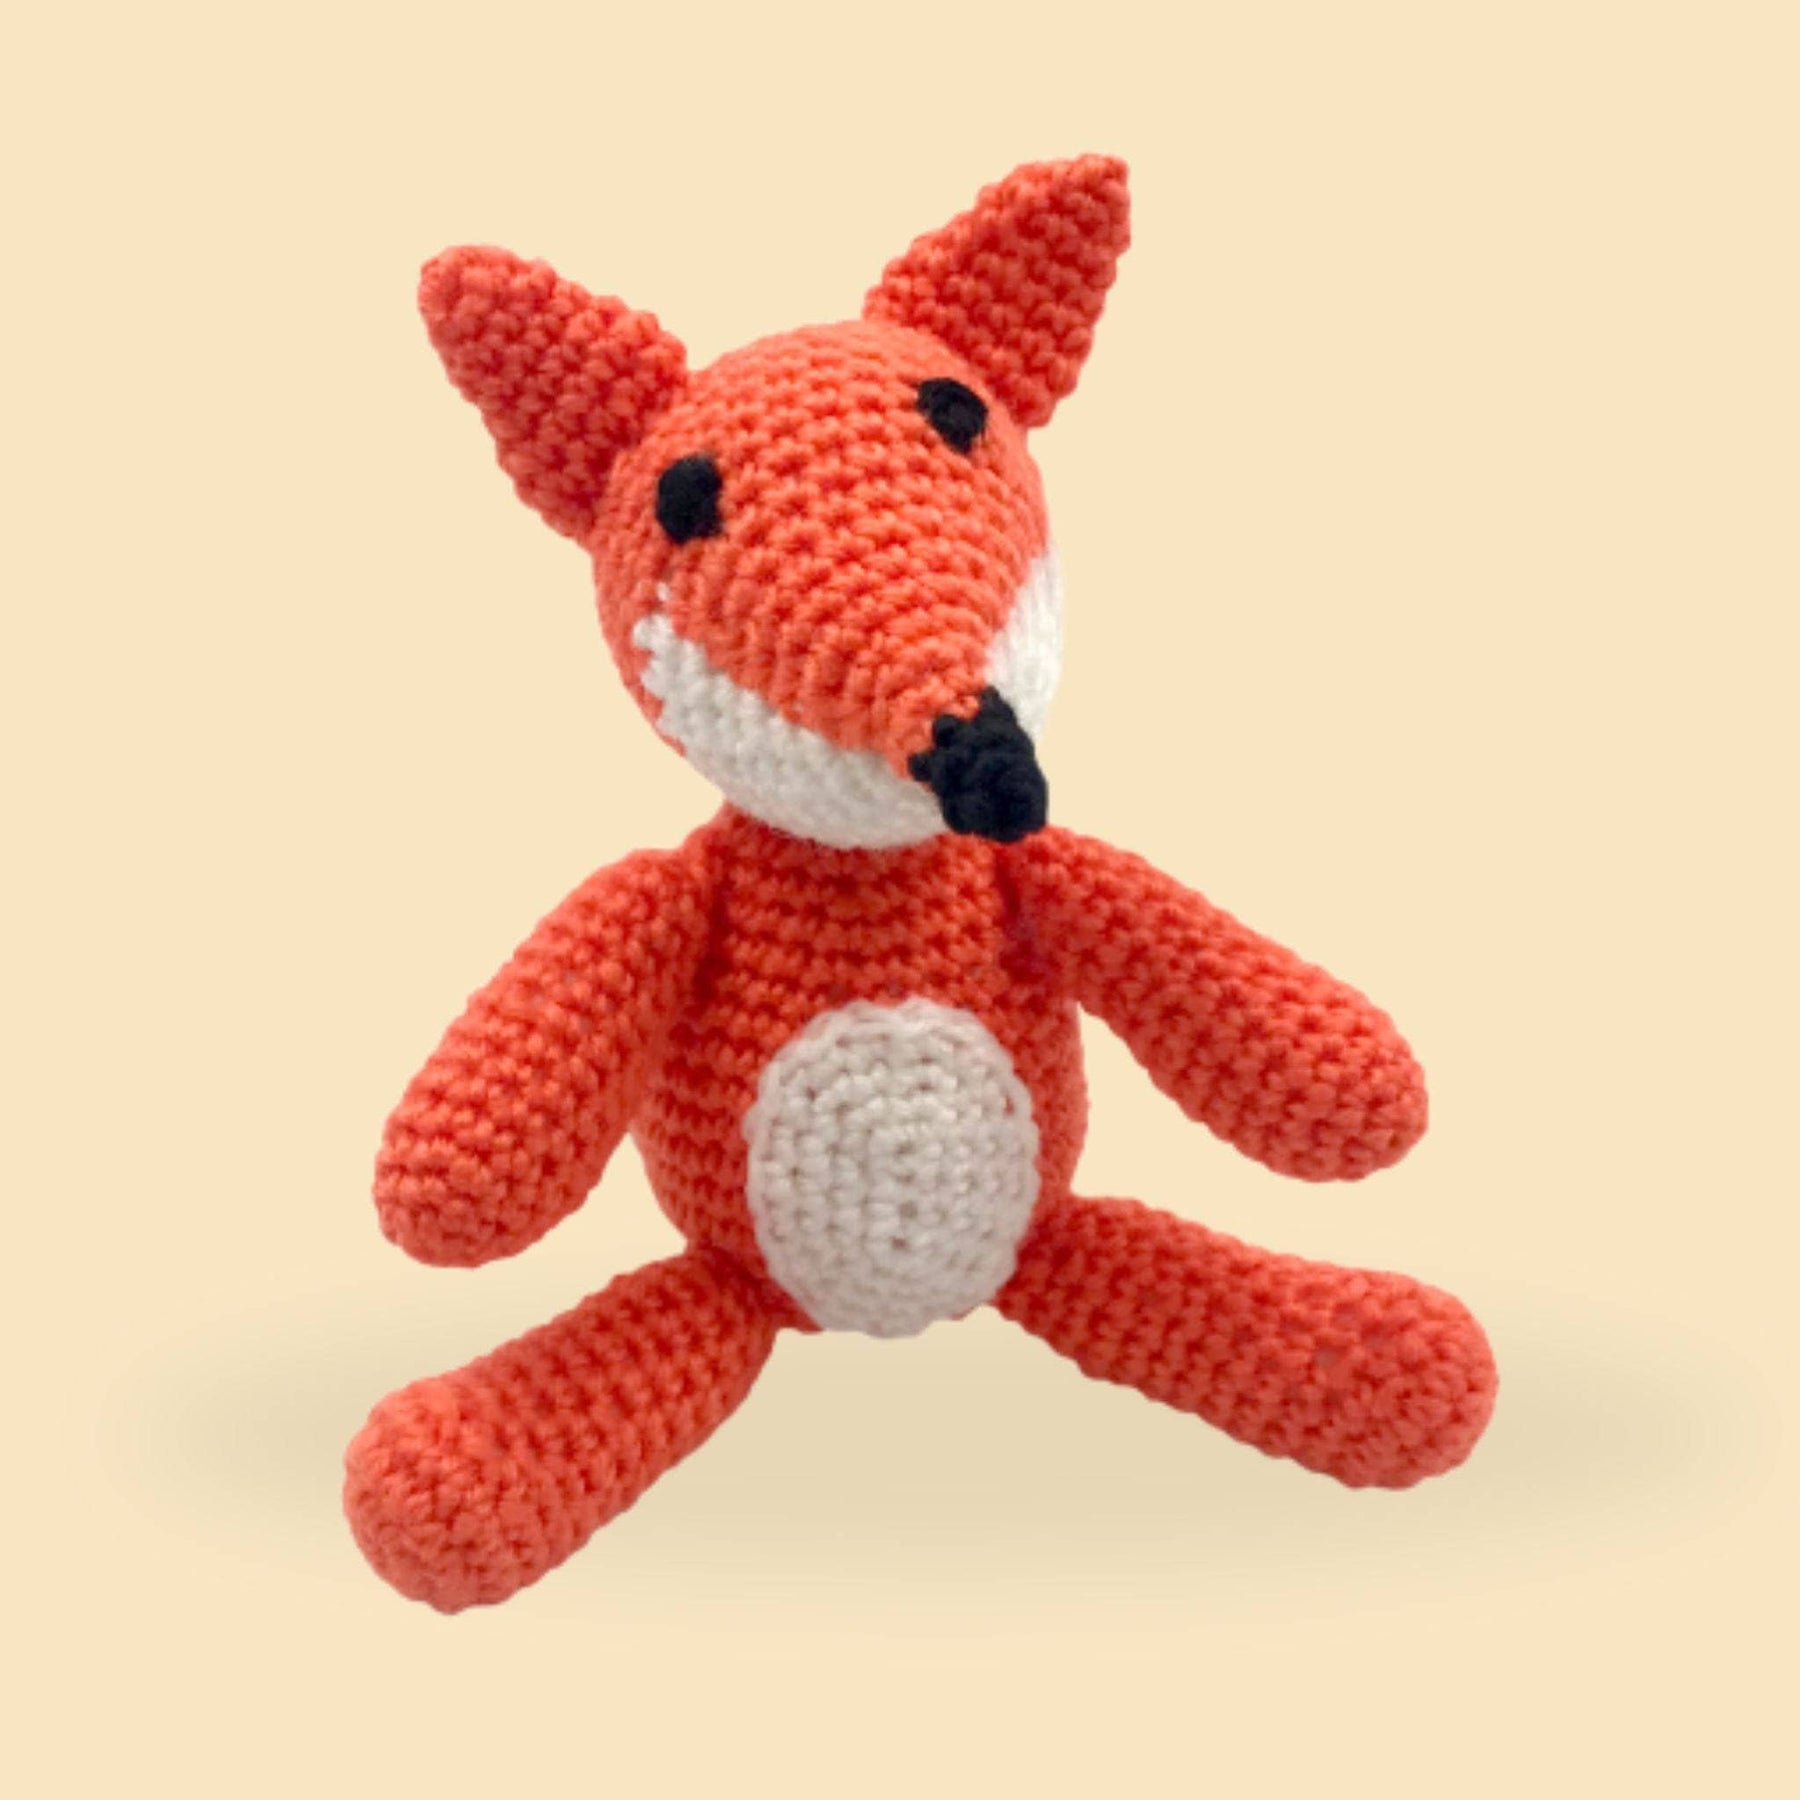 DIY Animal Crochet Kit for Beginners Knitted Animal kit With